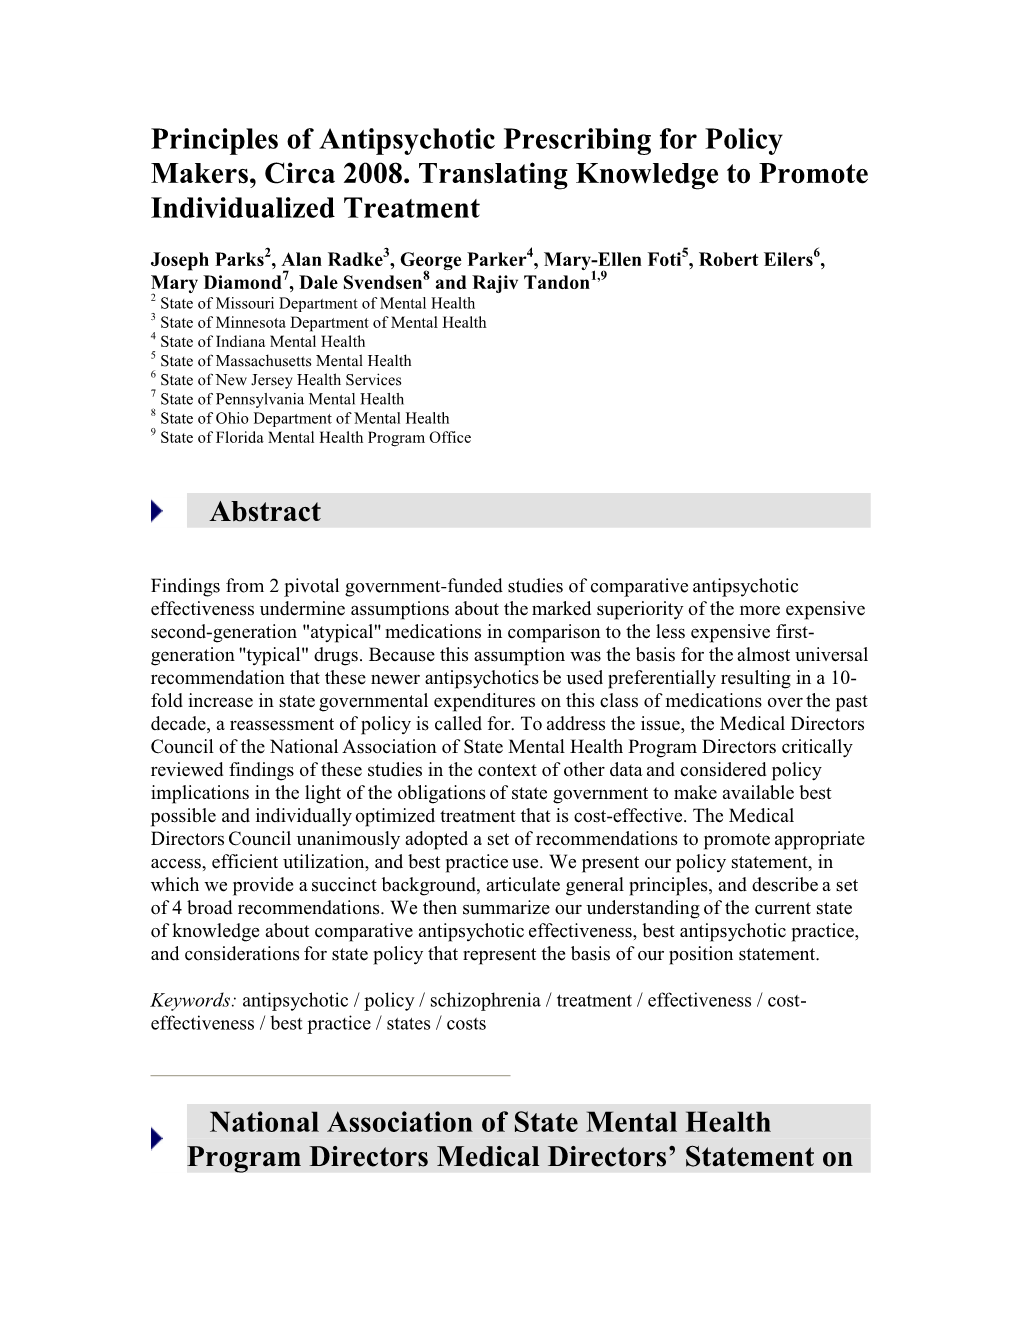 NASMHPD Principles of Antipsychotics Final.Pdf